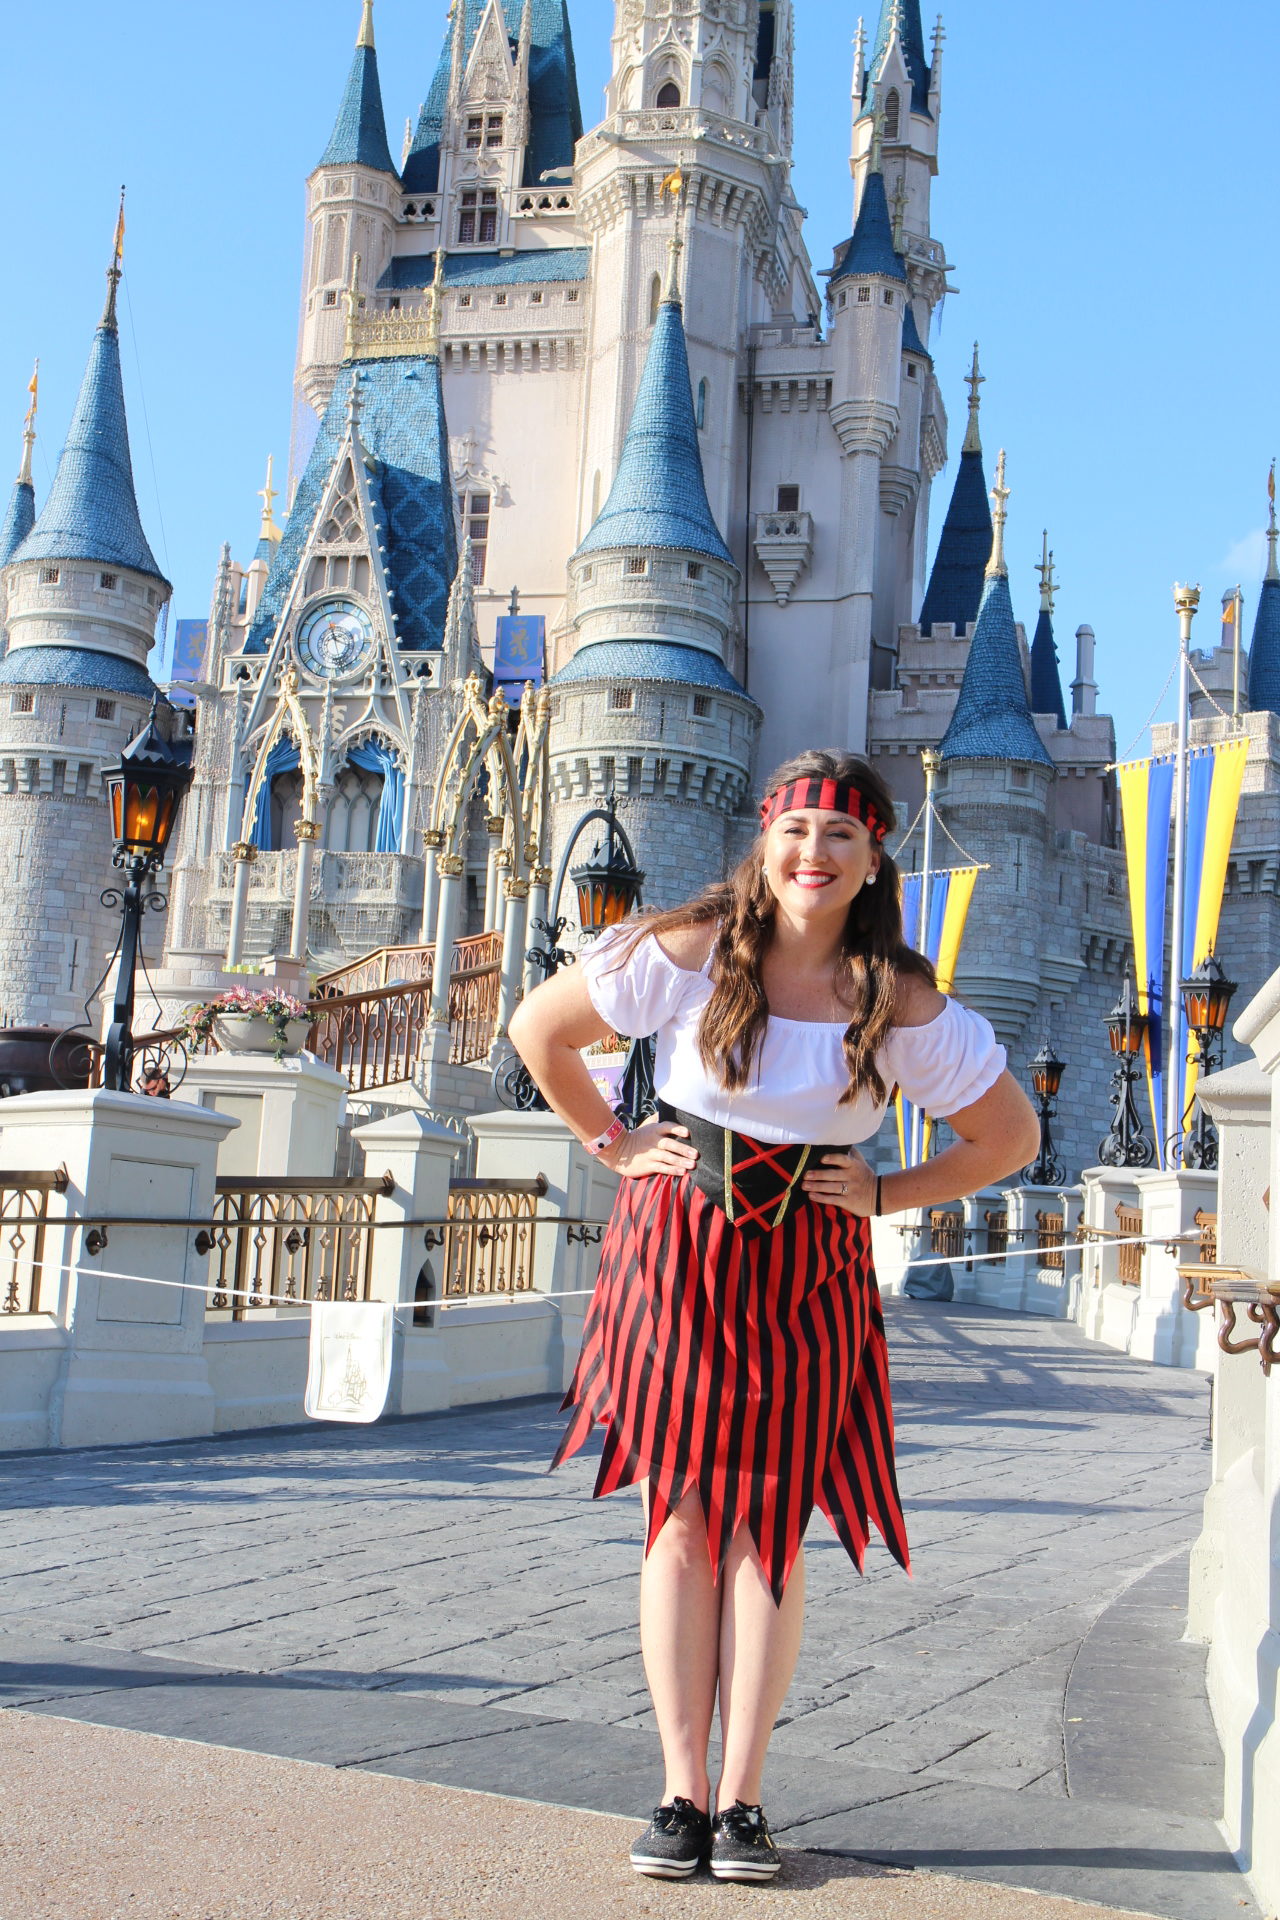 Pirate Costume at Disney World